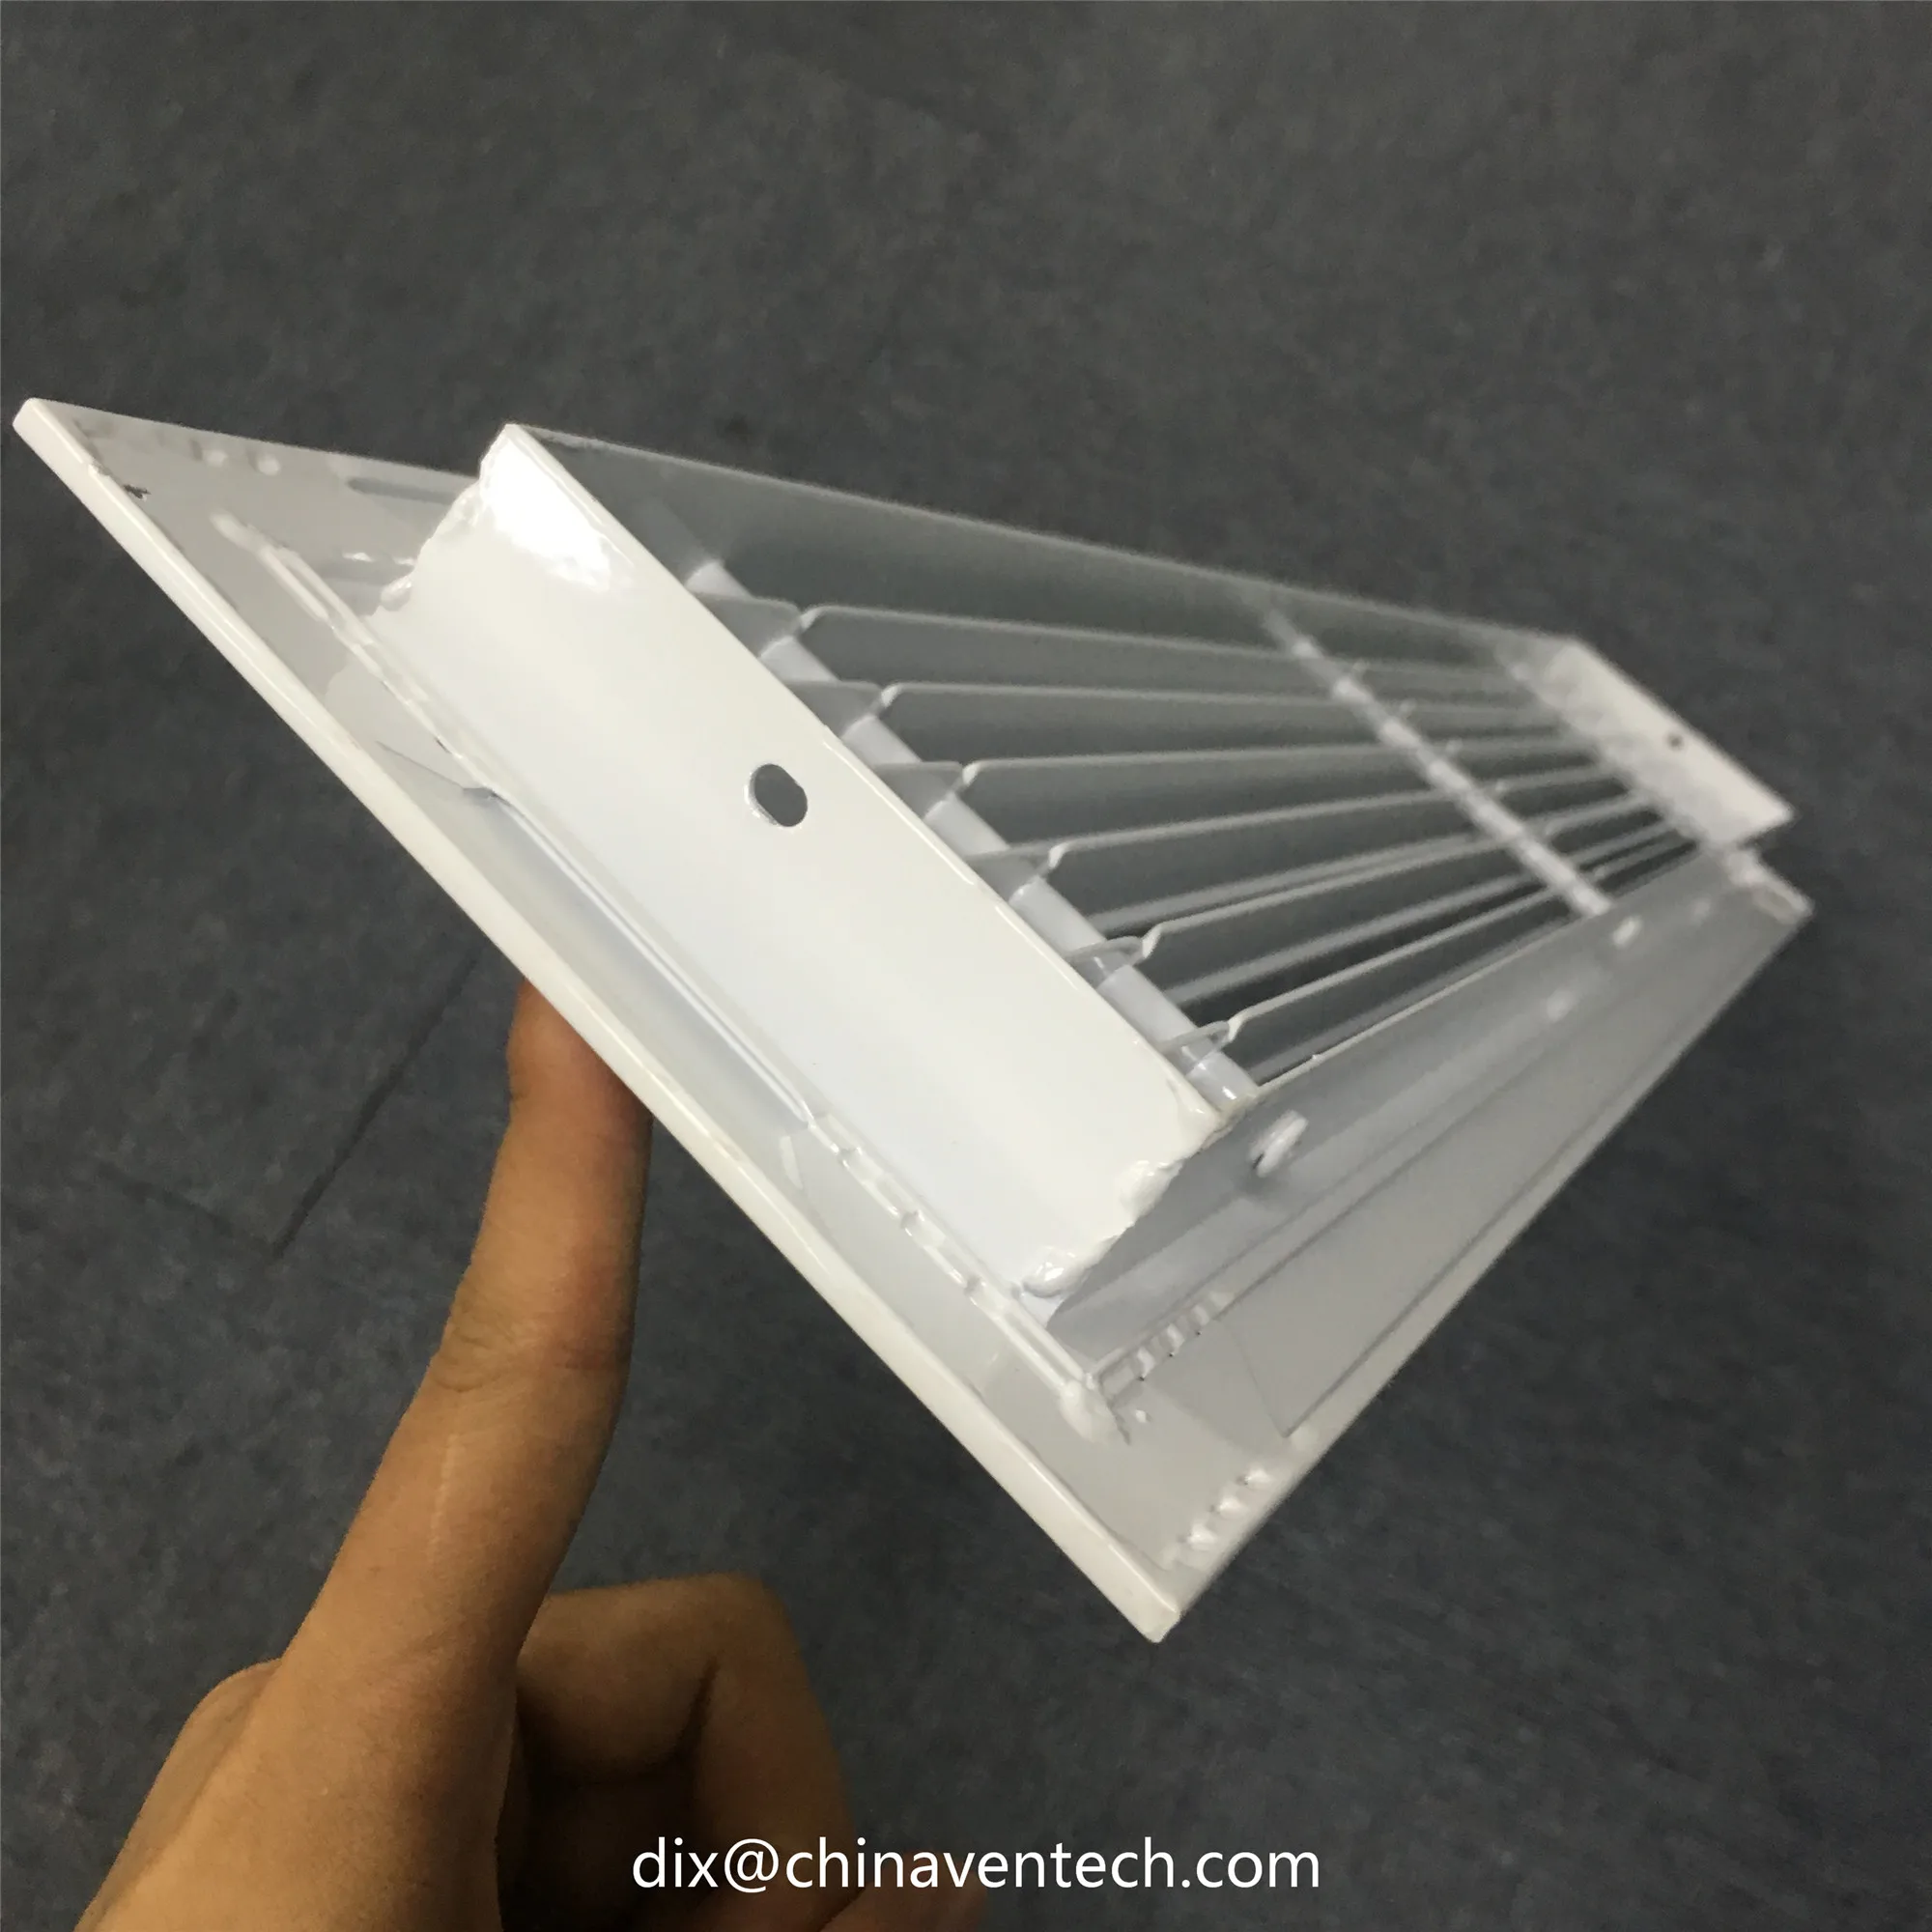 hvac system supply air linear bar aluminum ventilation air grilles